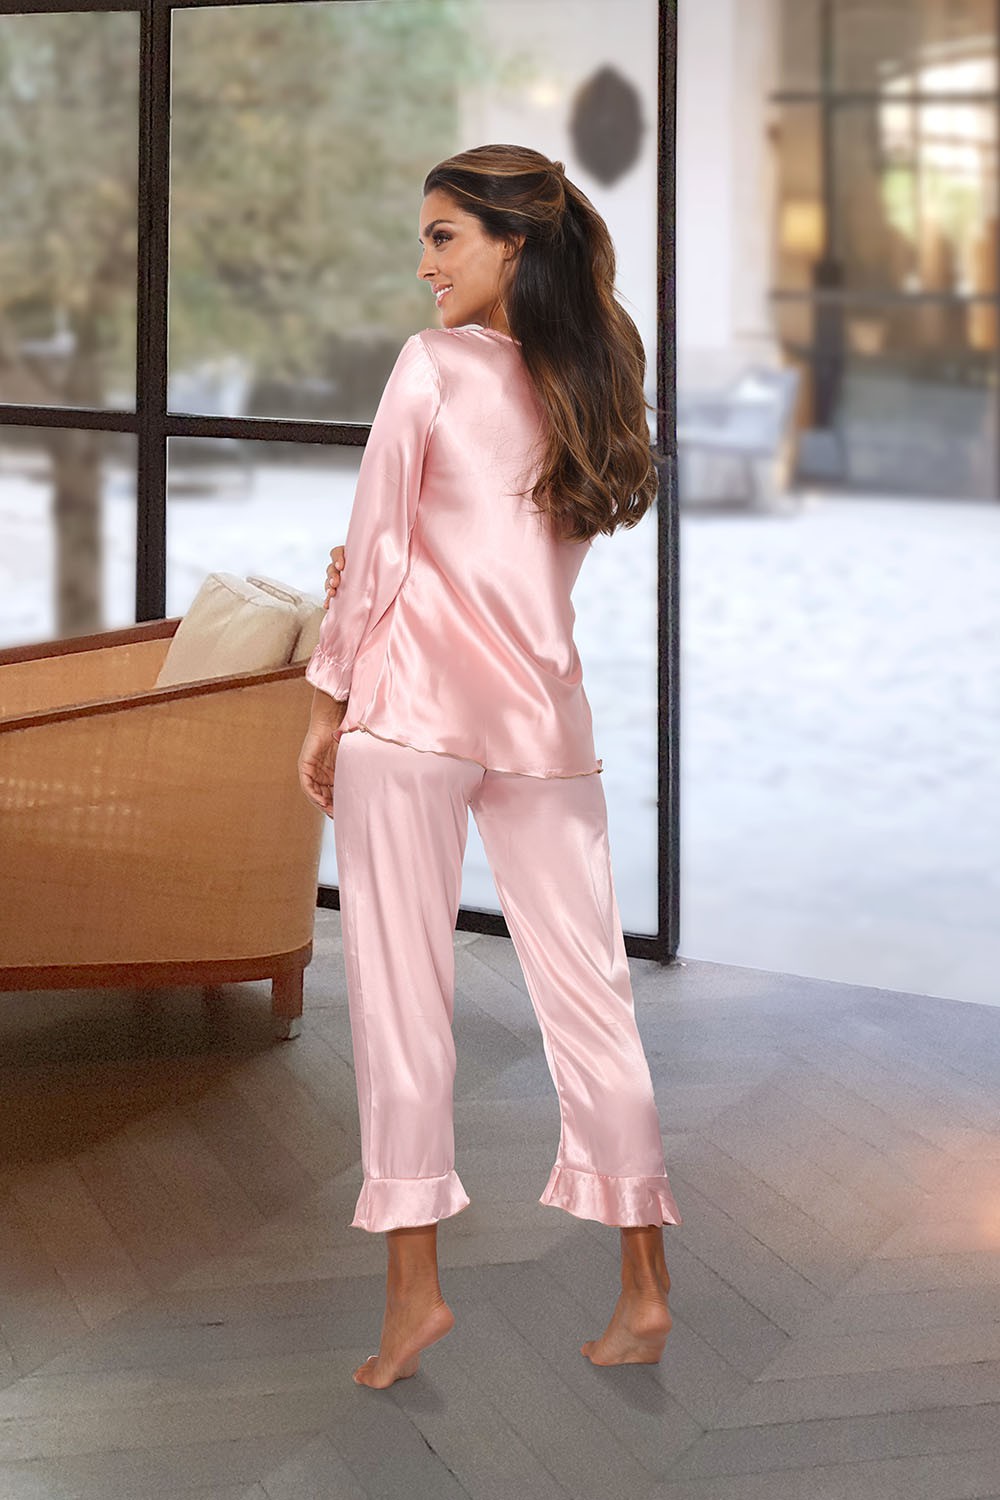 Pyjamas en satin VS5 – L'Escale Rose